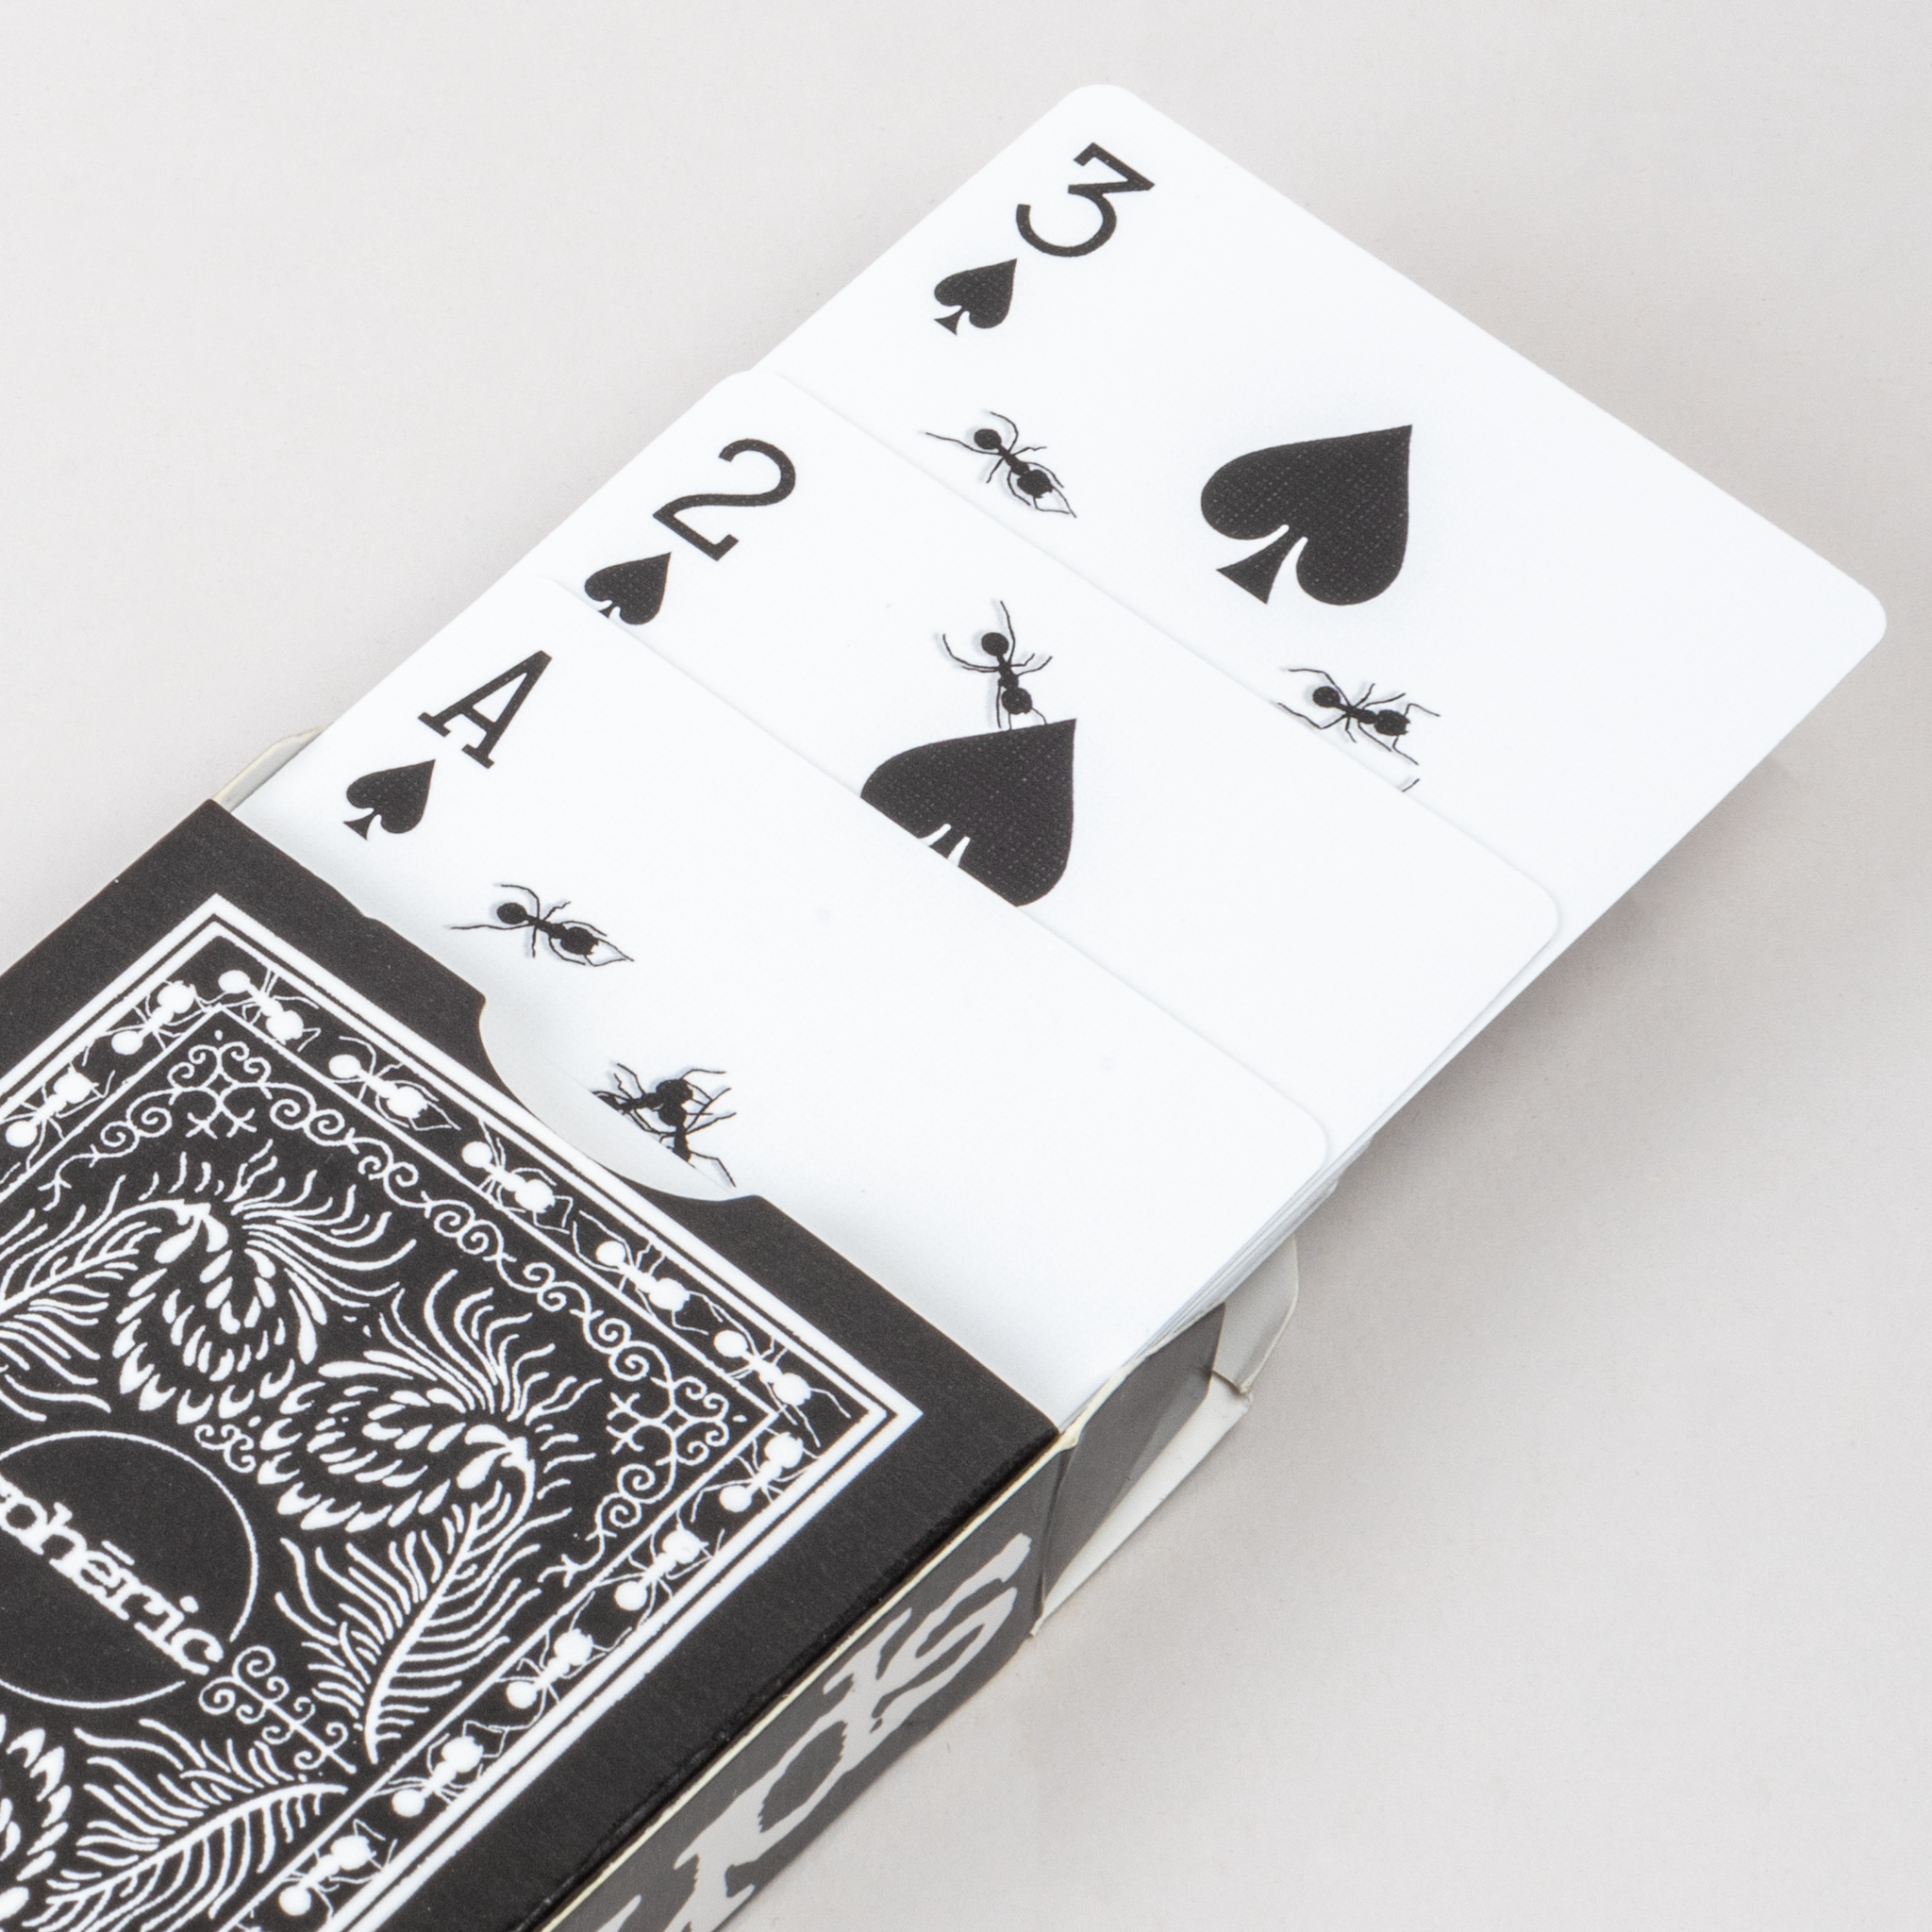 Billy Menezes - 'MYSTERY DECKS' Playing Cards